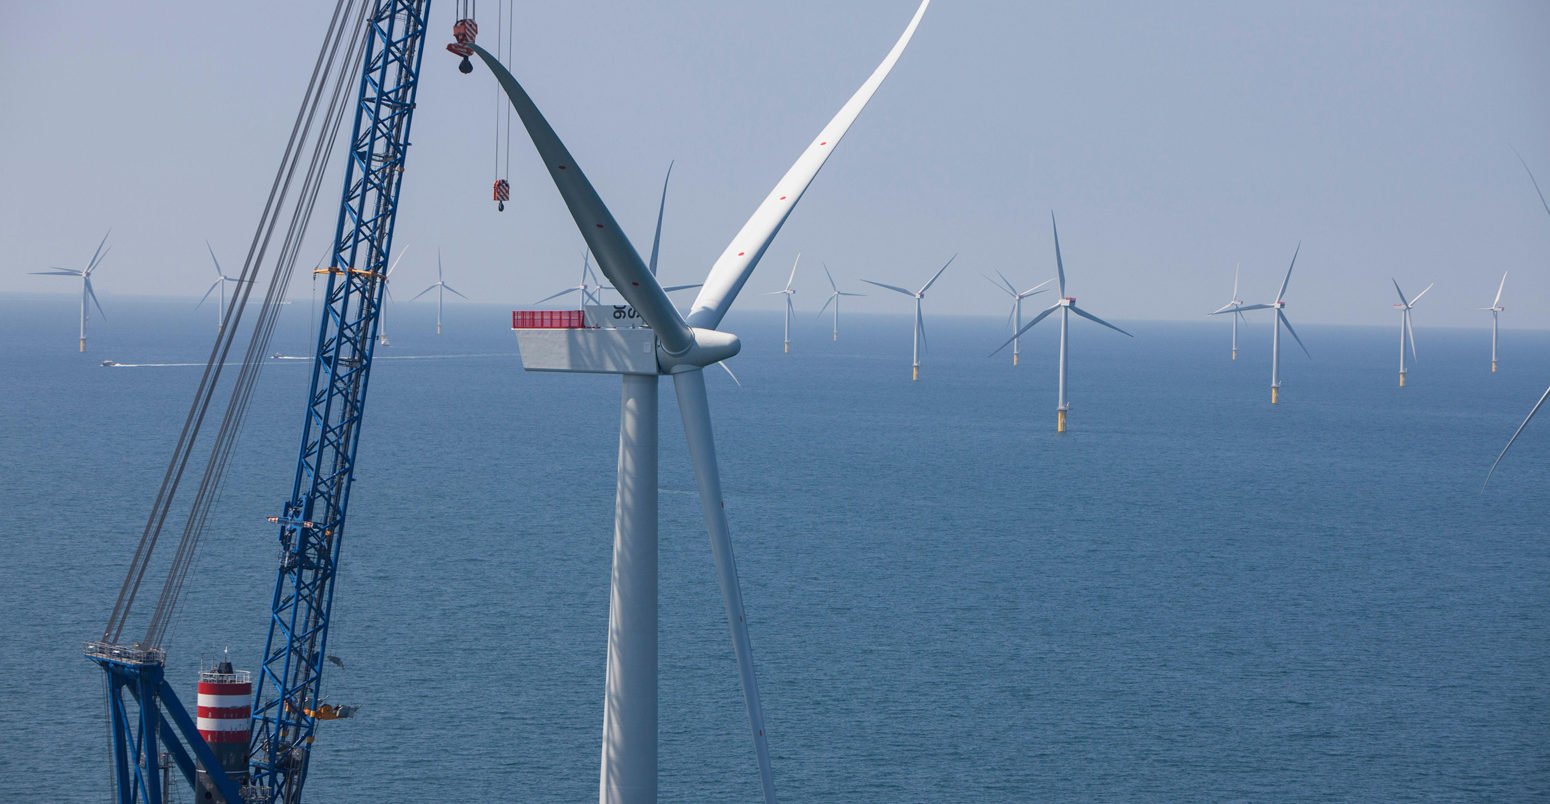 Duddon Sands offshore wind farm under construction in the Irish Sea, UK